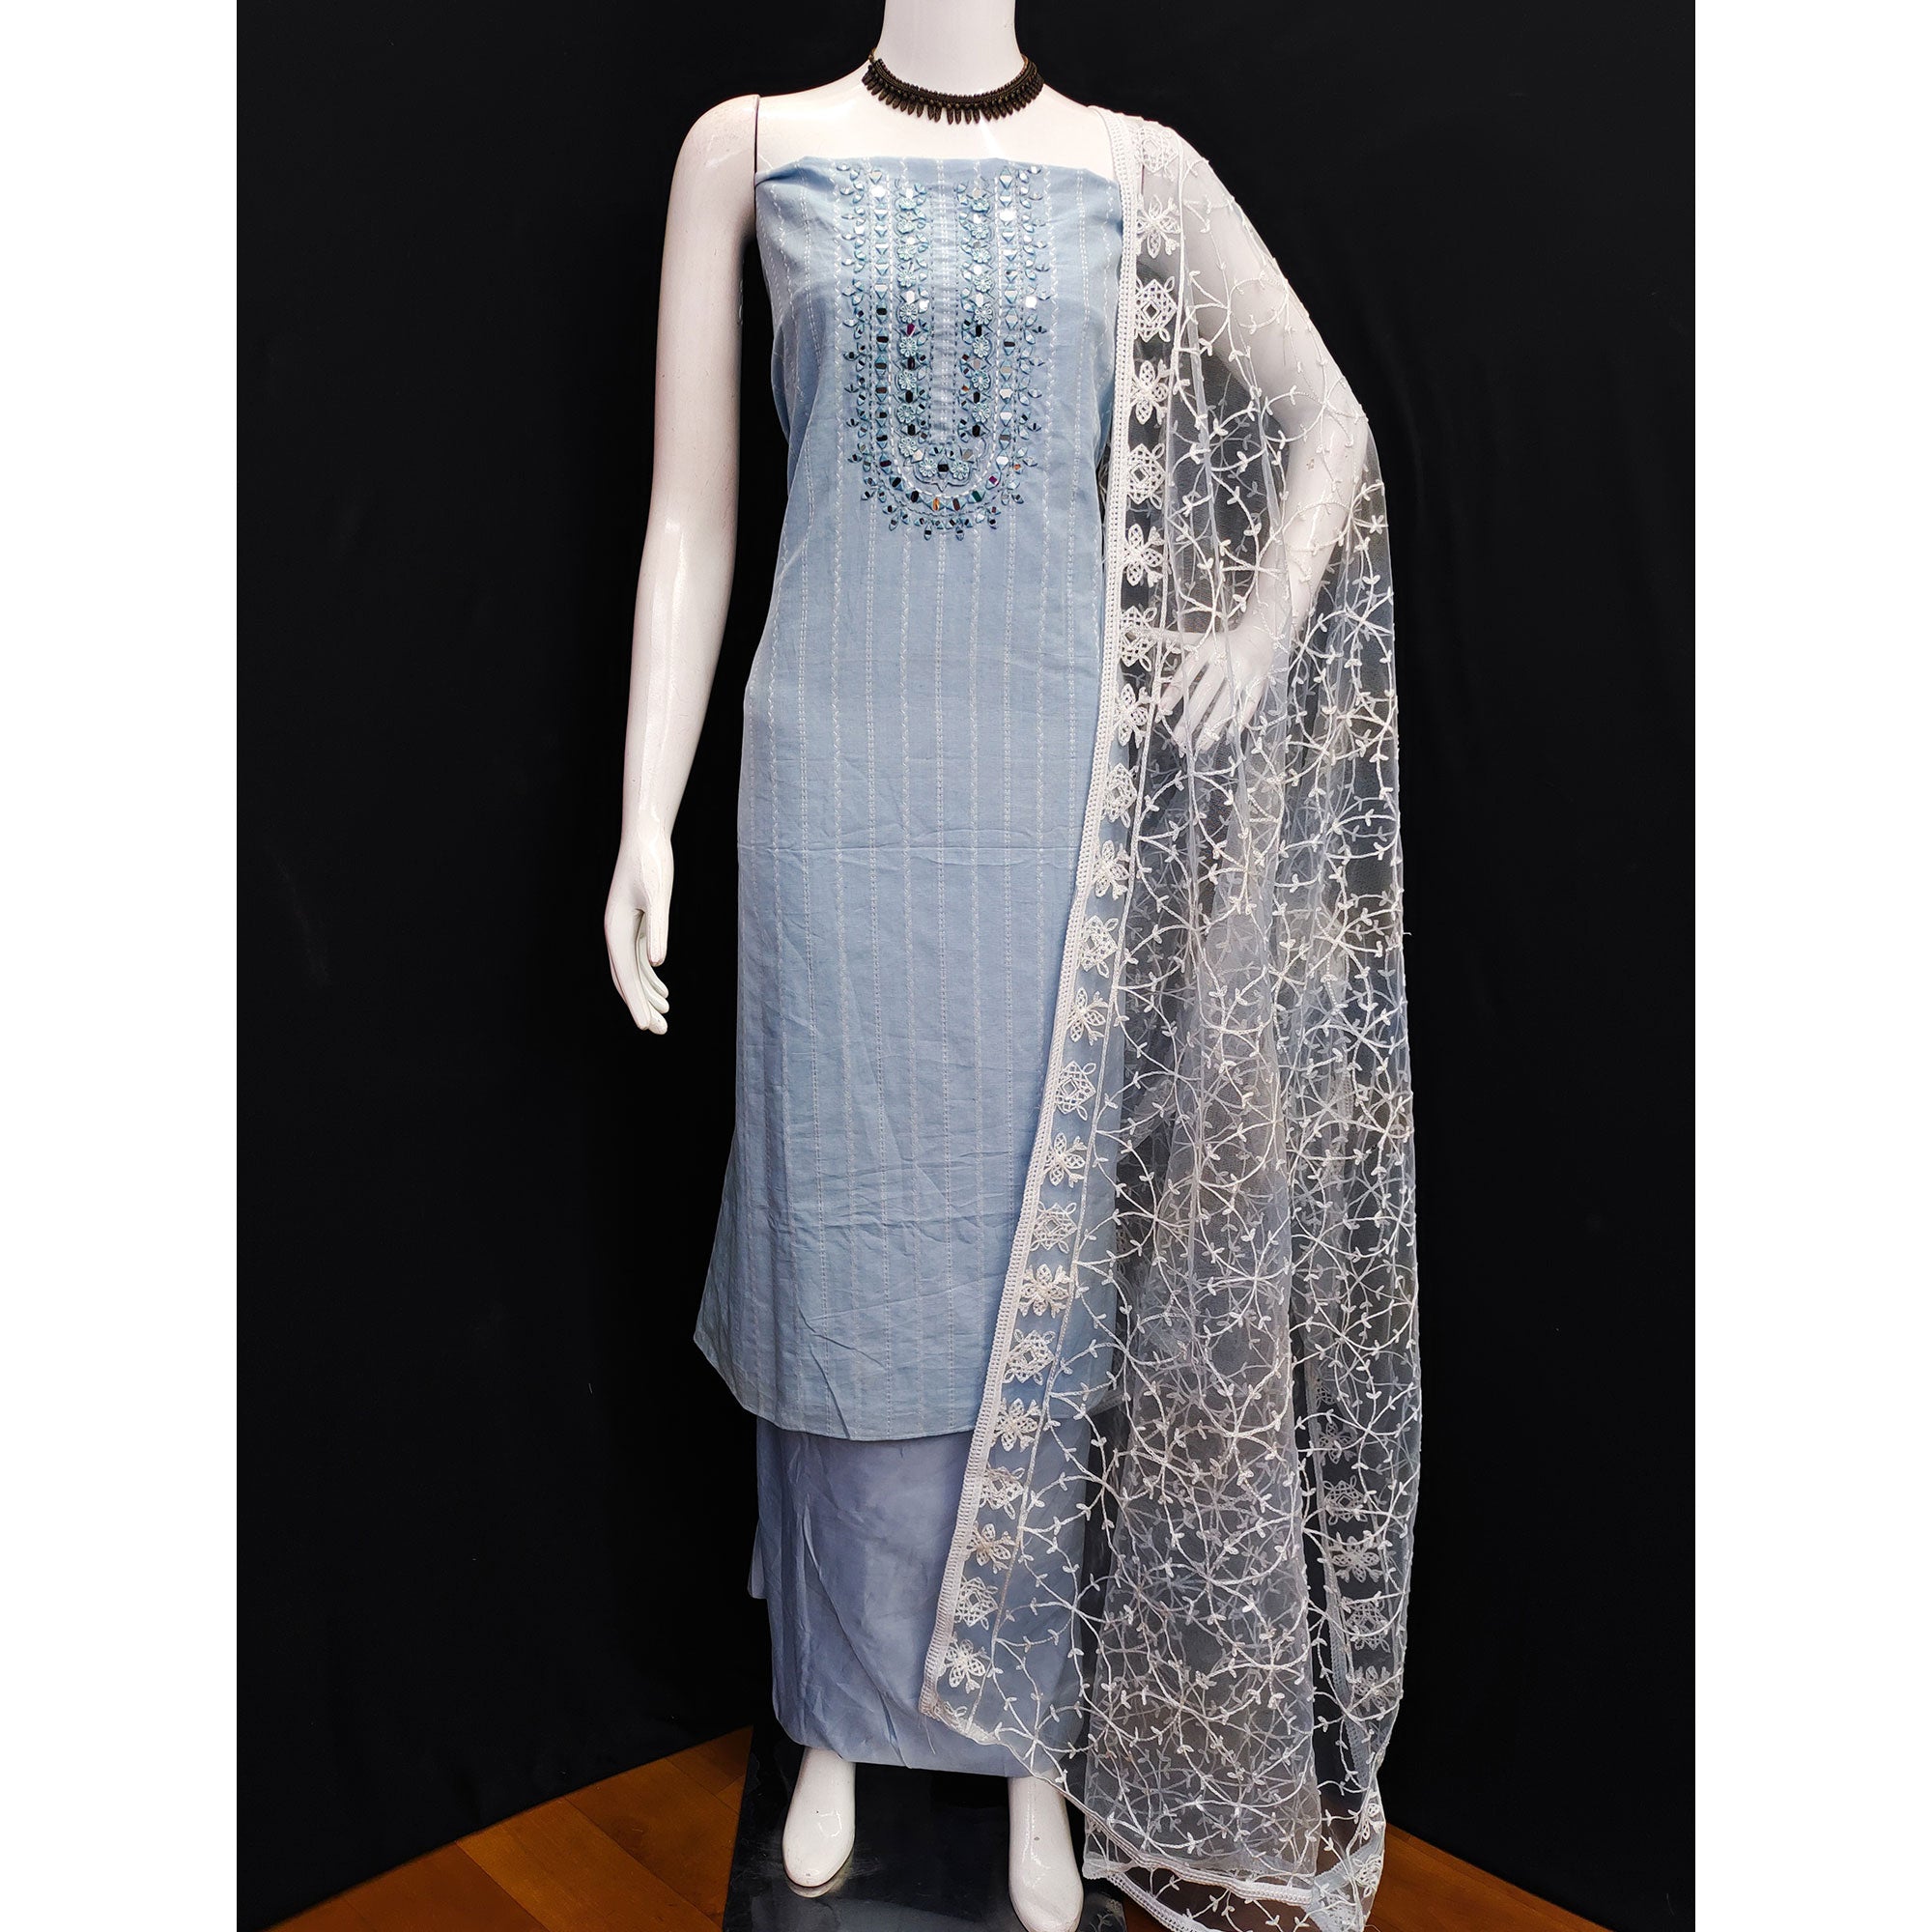 Blue Woven Pure Cotton Dress Material